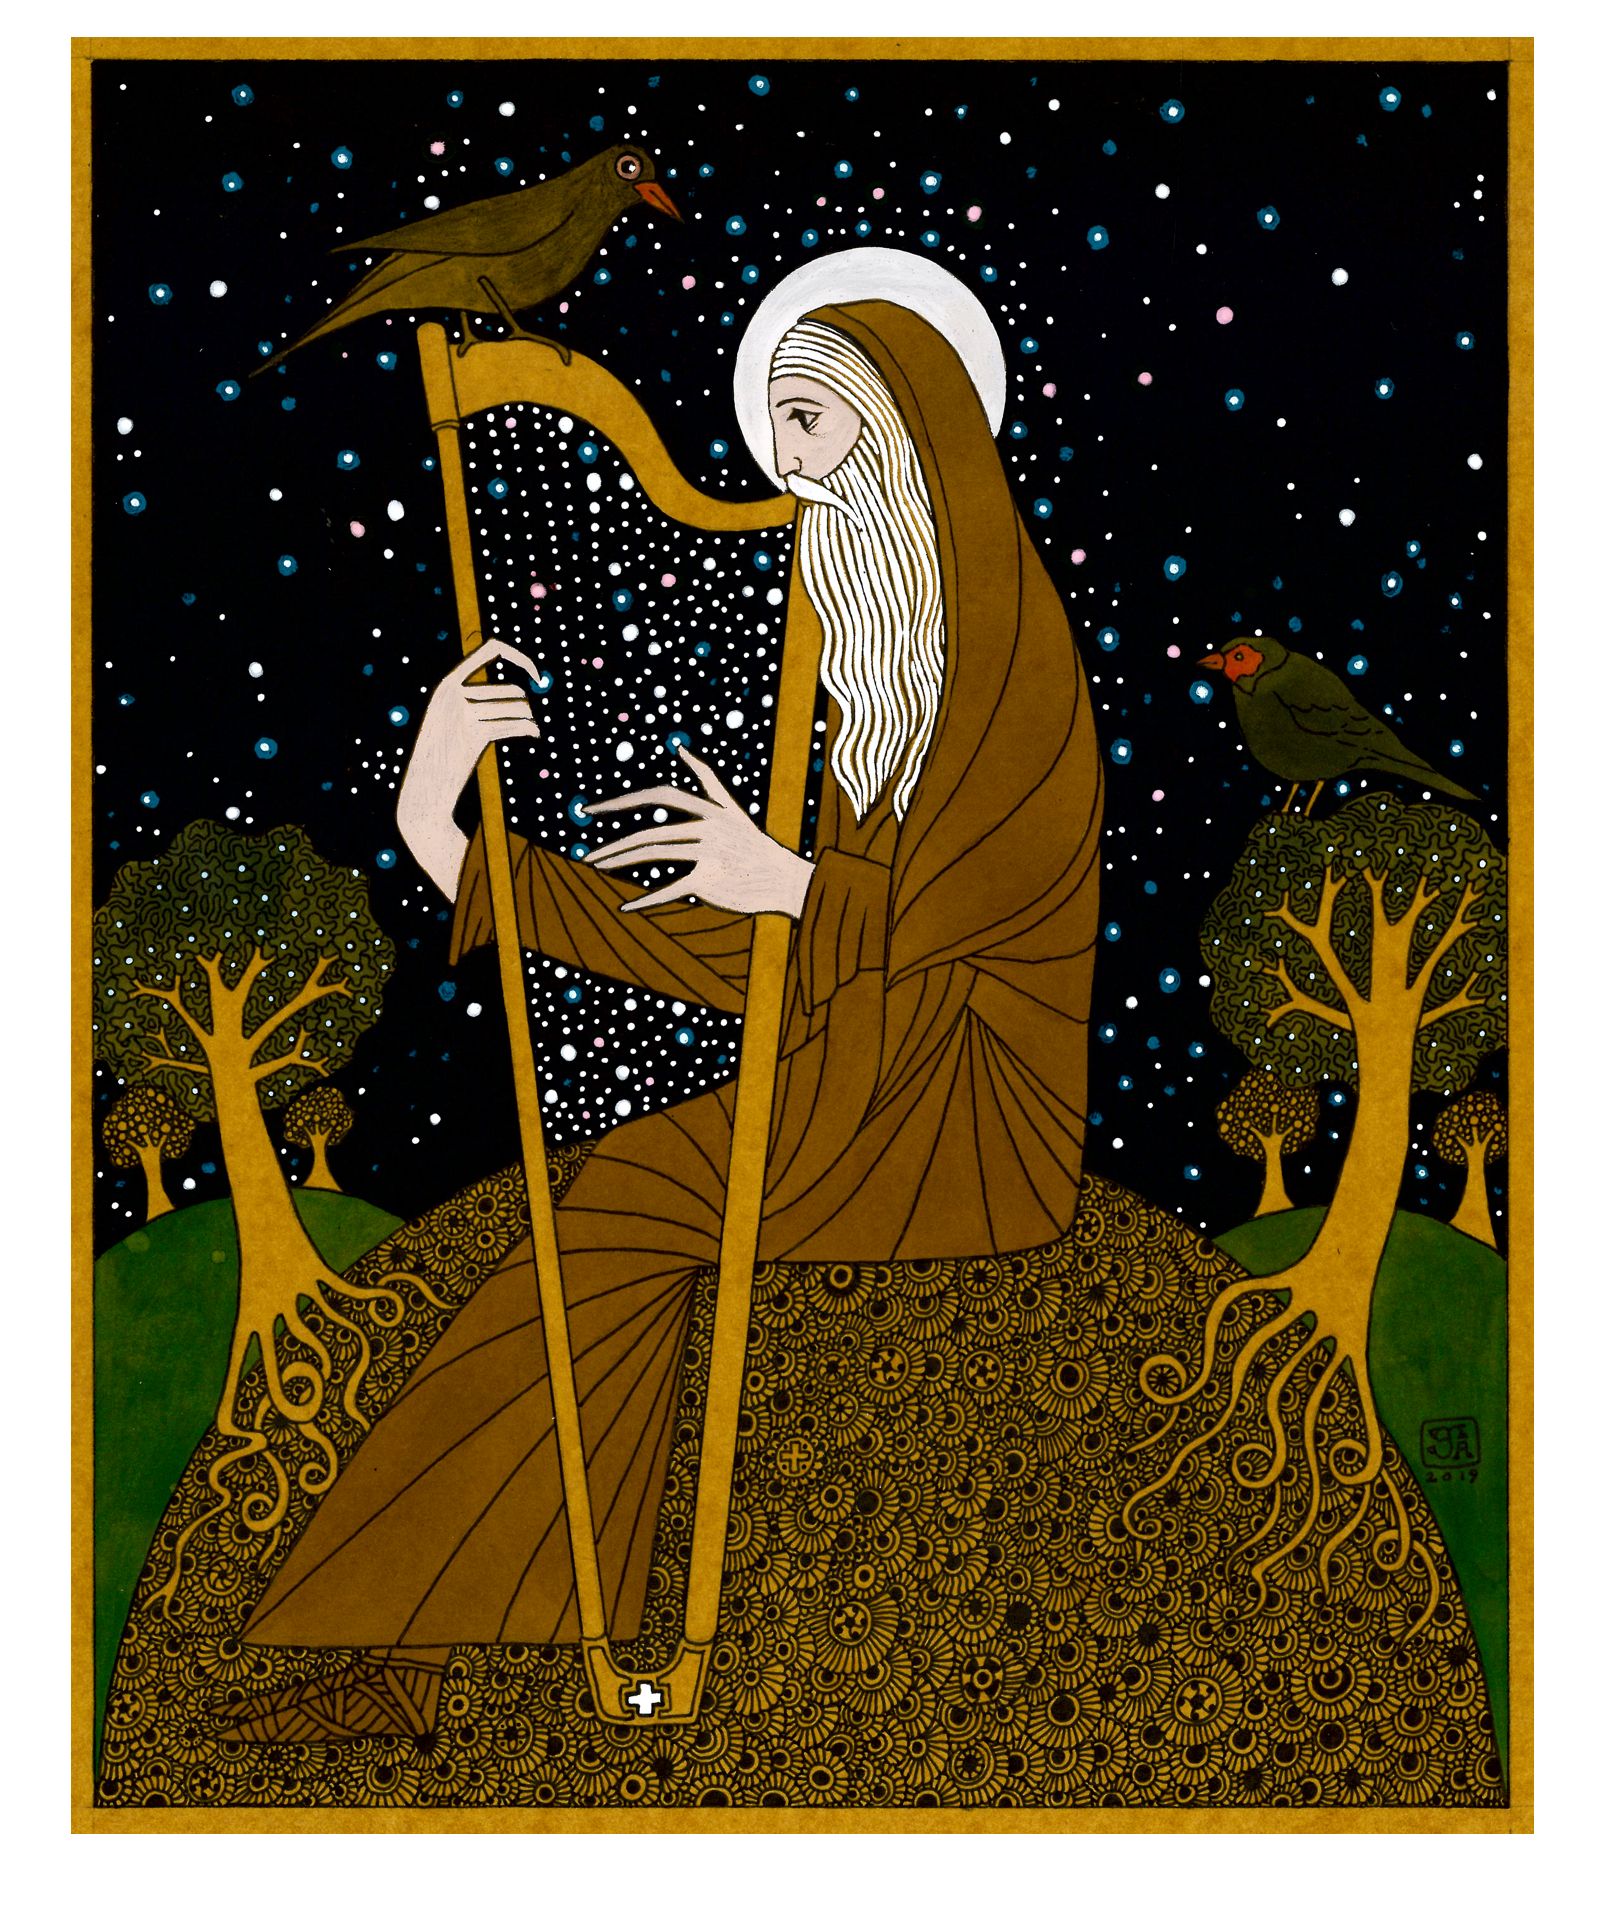 Saint Kevin of Glendalough, Co. Wicklow.